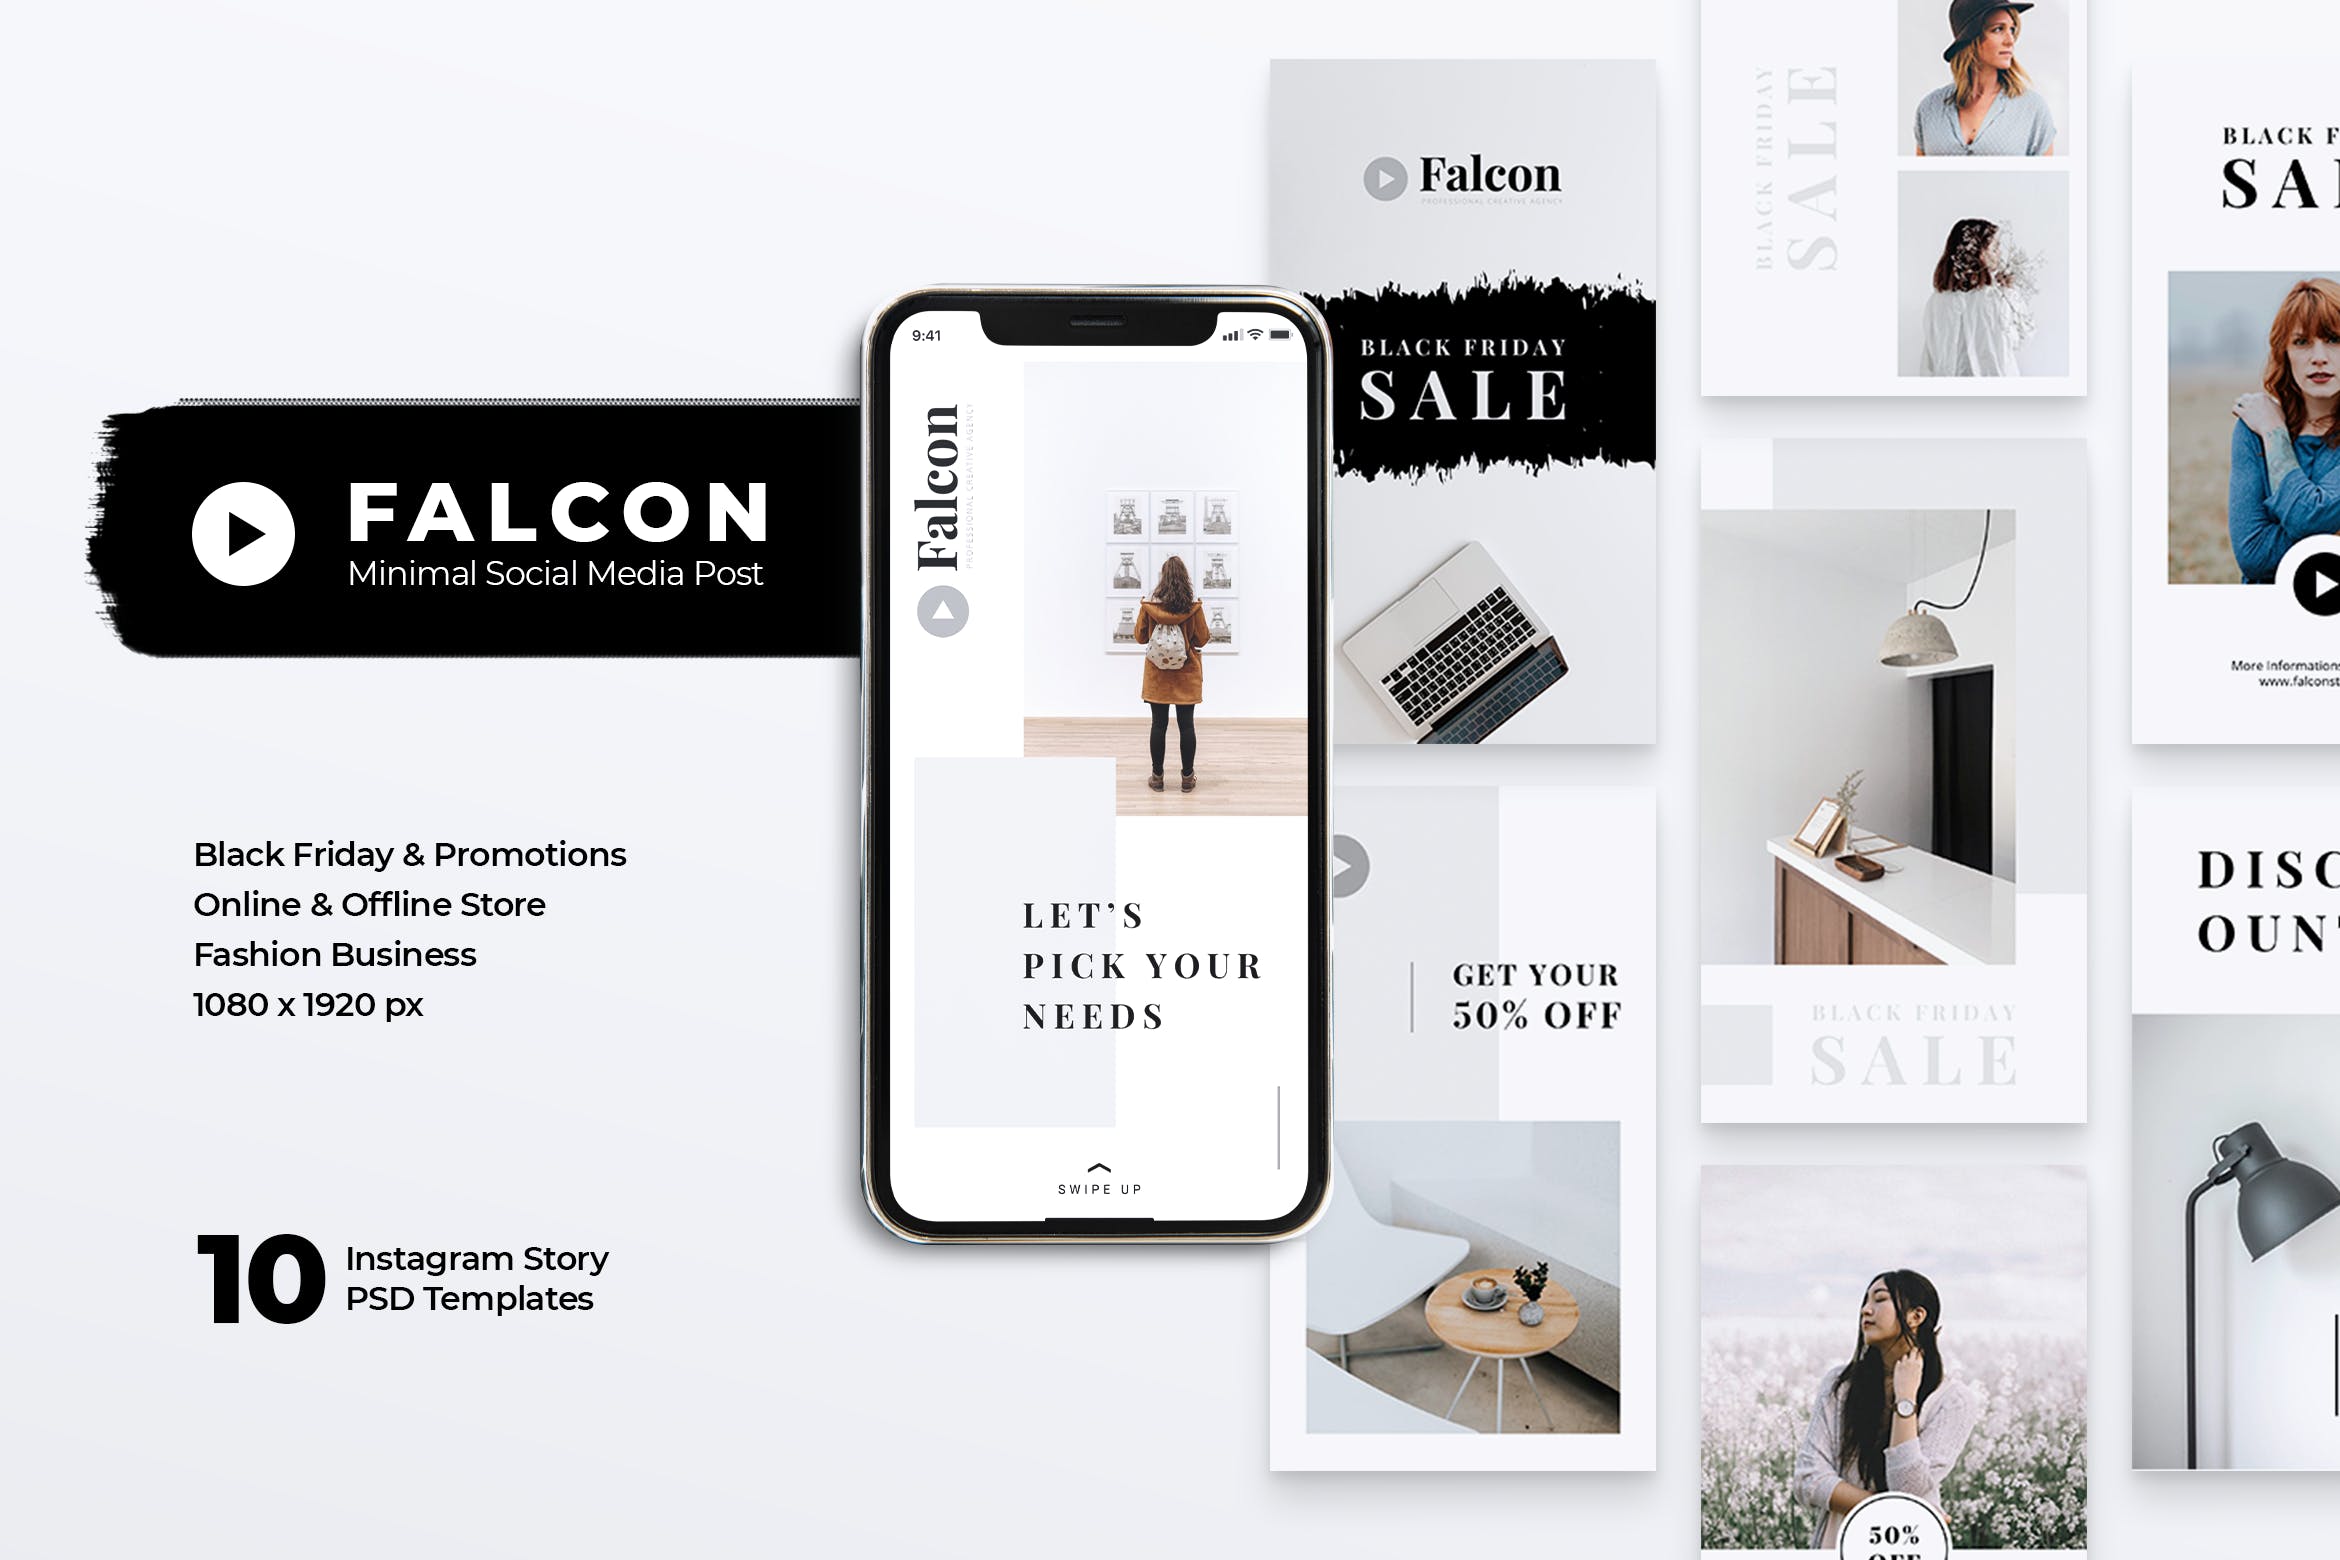 创意设计代理Instagram品牌推广设计模板素材库精选 FALCON Creative Agency Instagram Stories插图